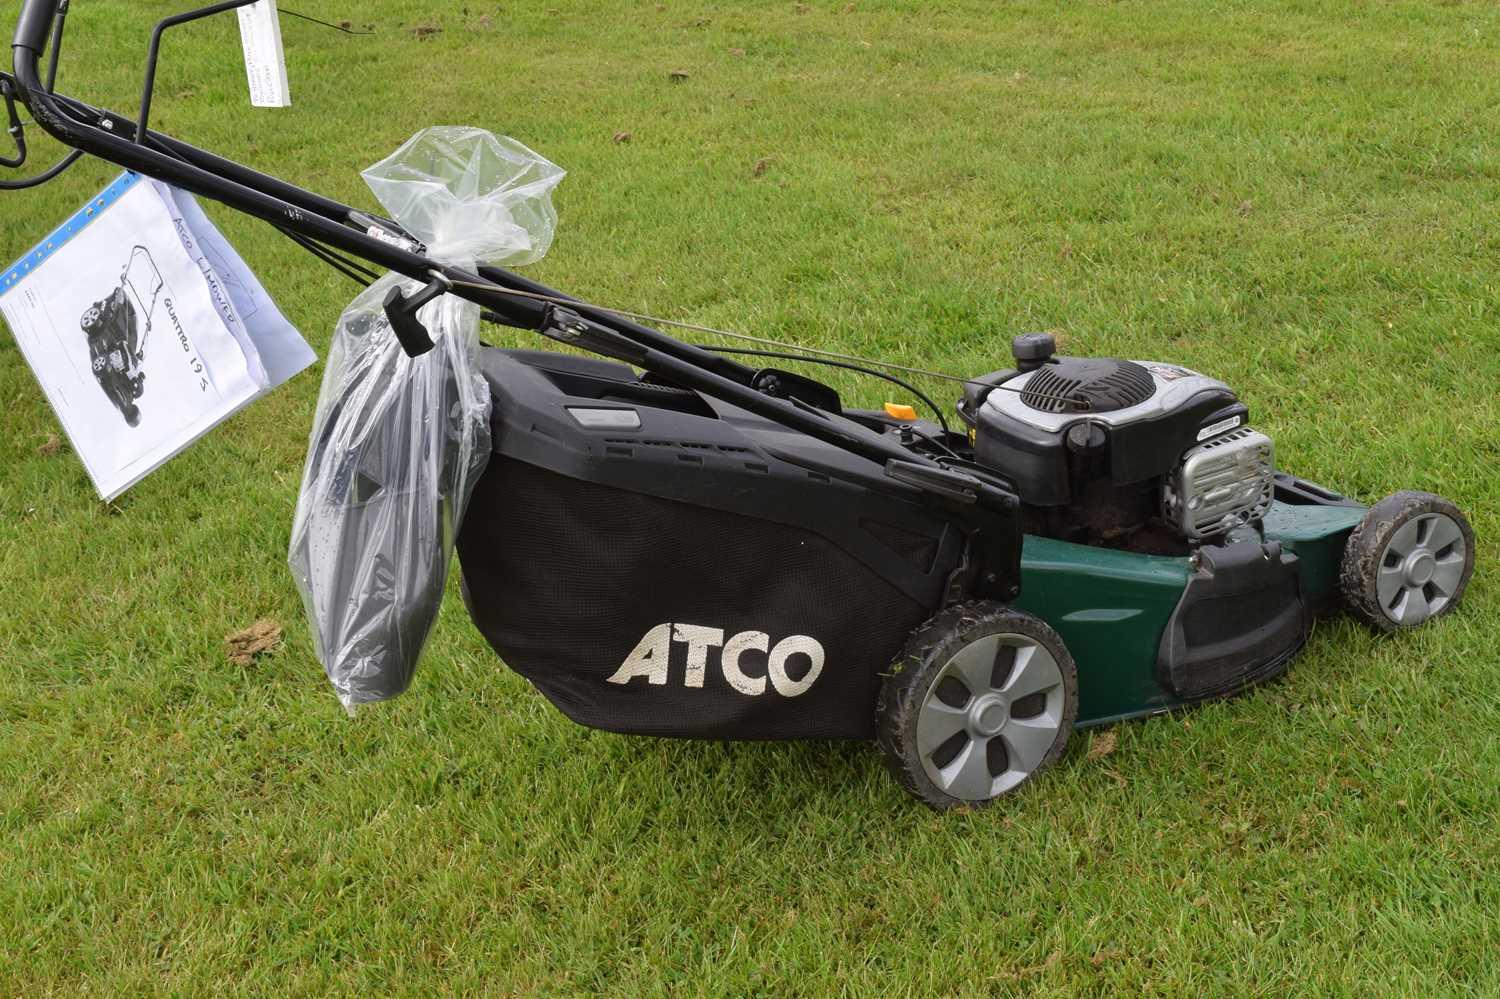 Atco Quattro 195 petrol lawn mower - Image 6 of 7